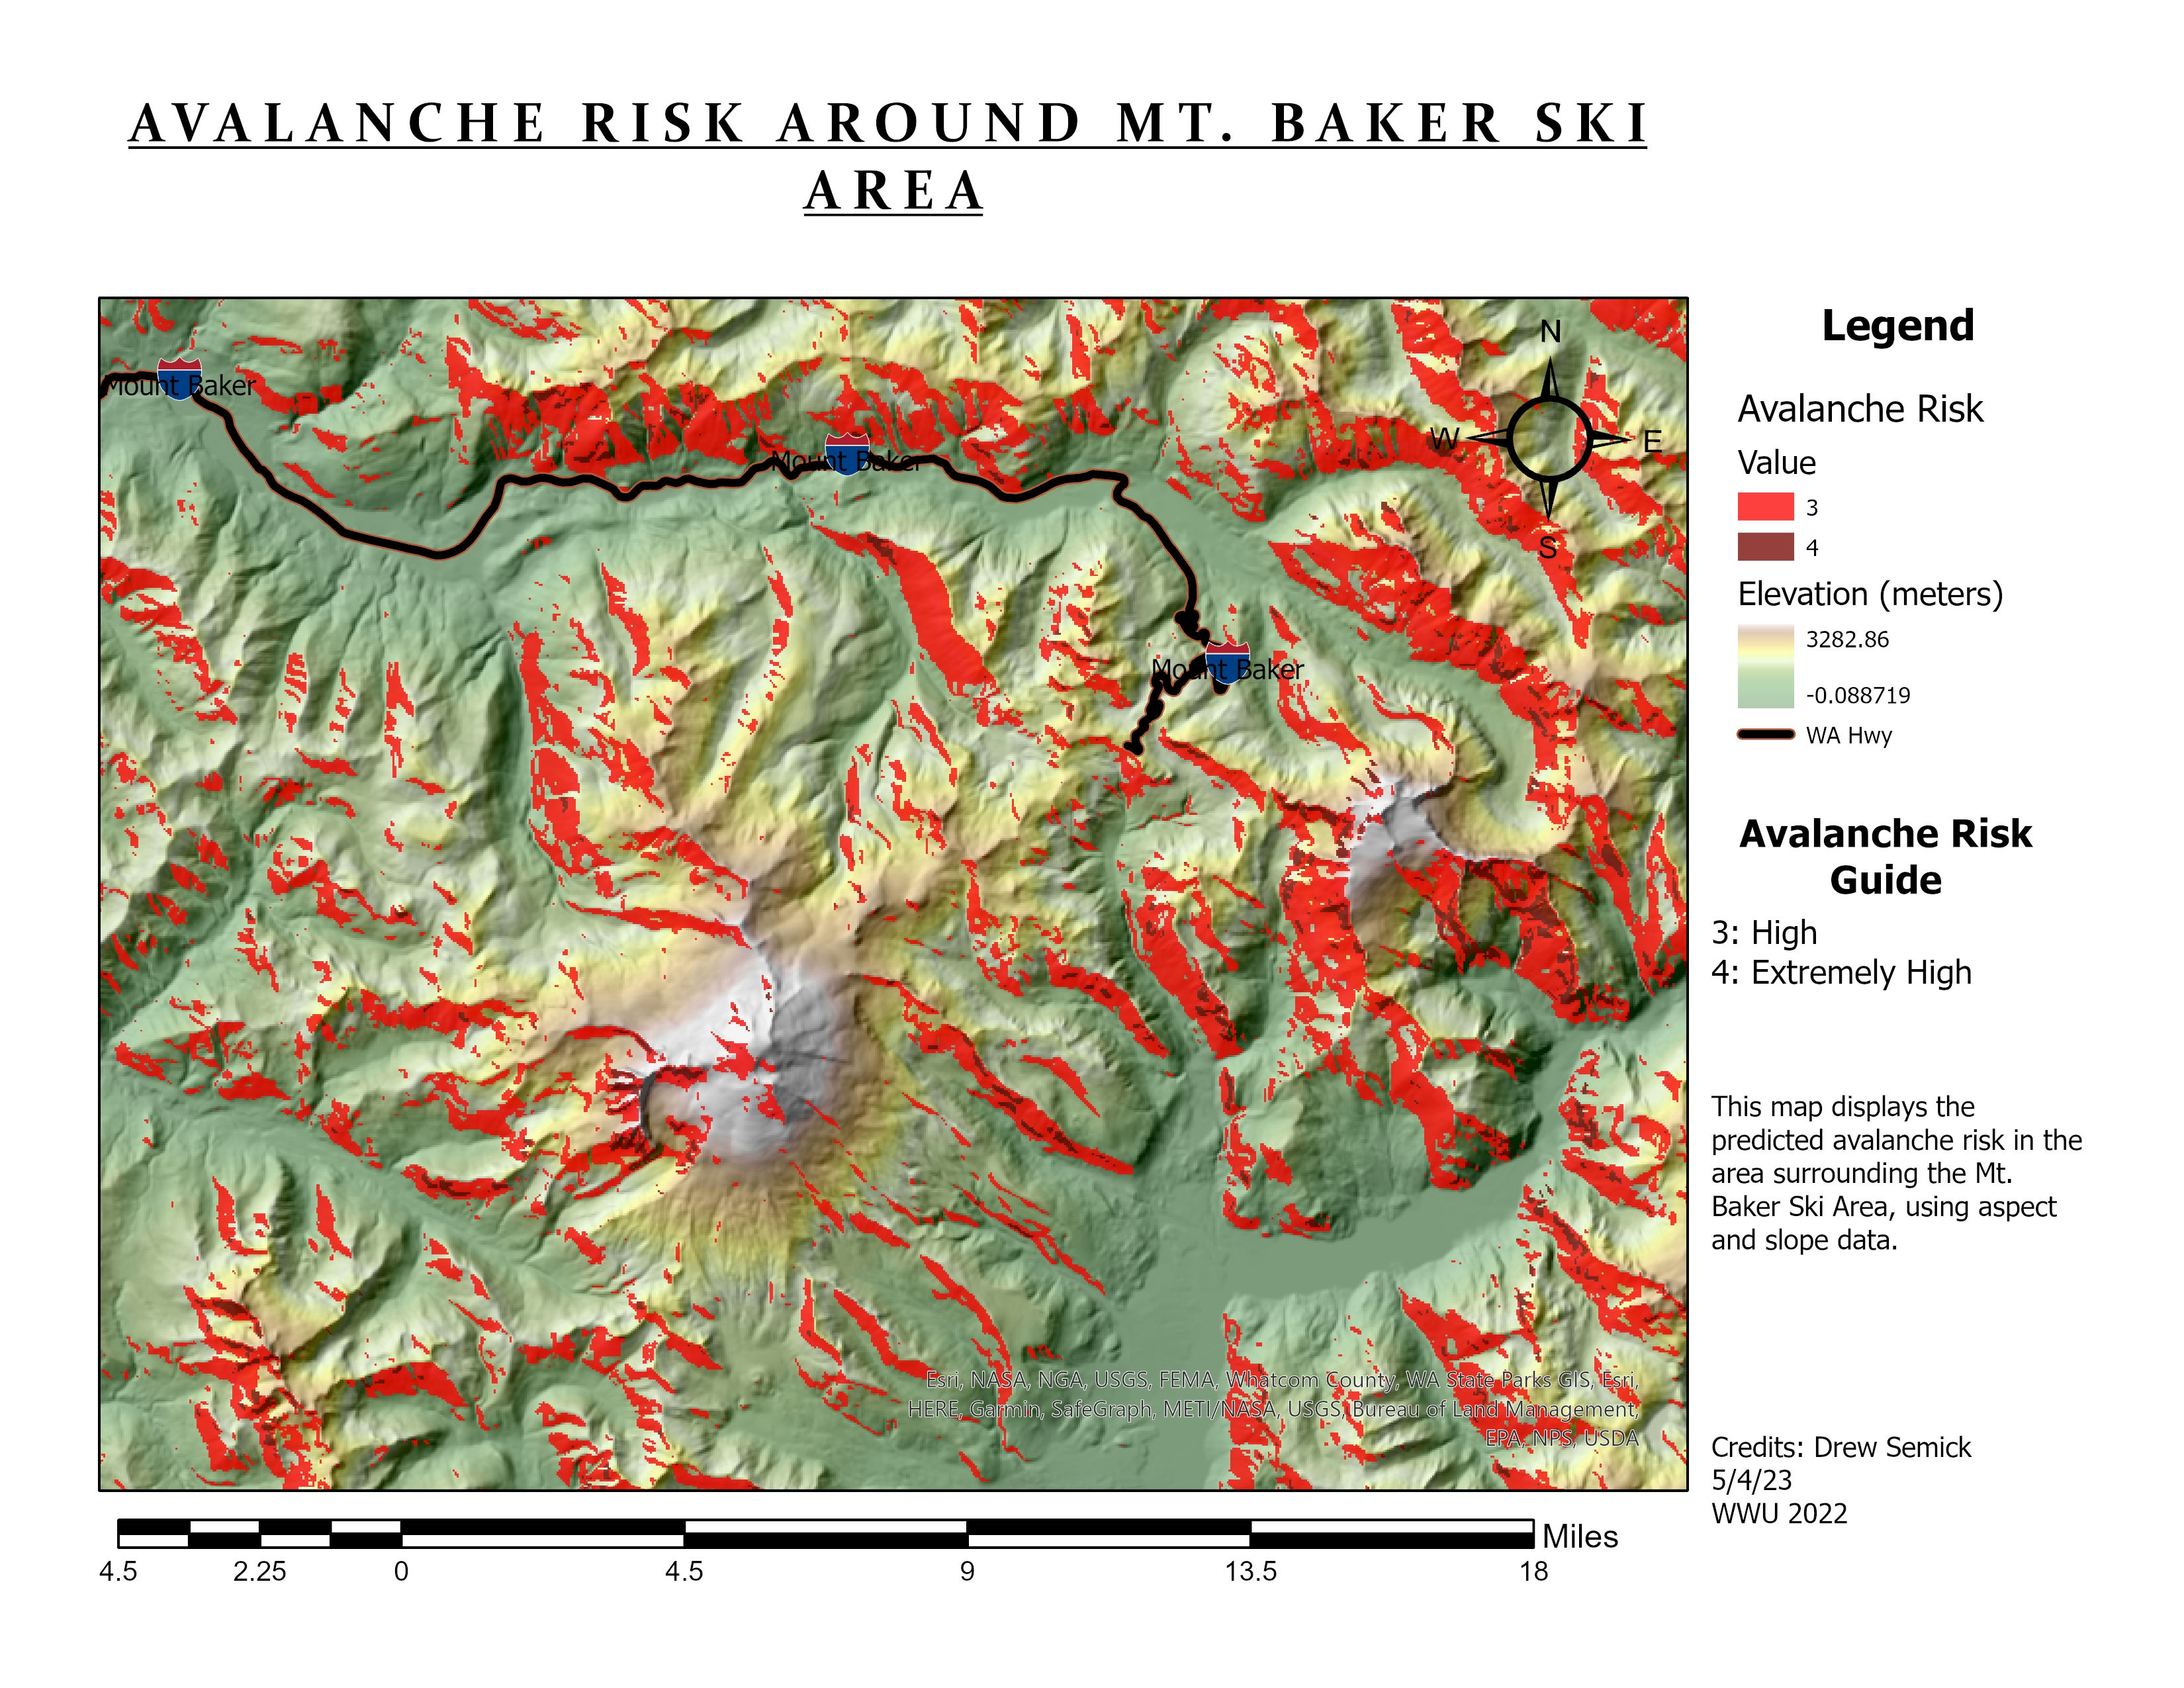 Avalanche Risk Around Mt. Baker Ski Area